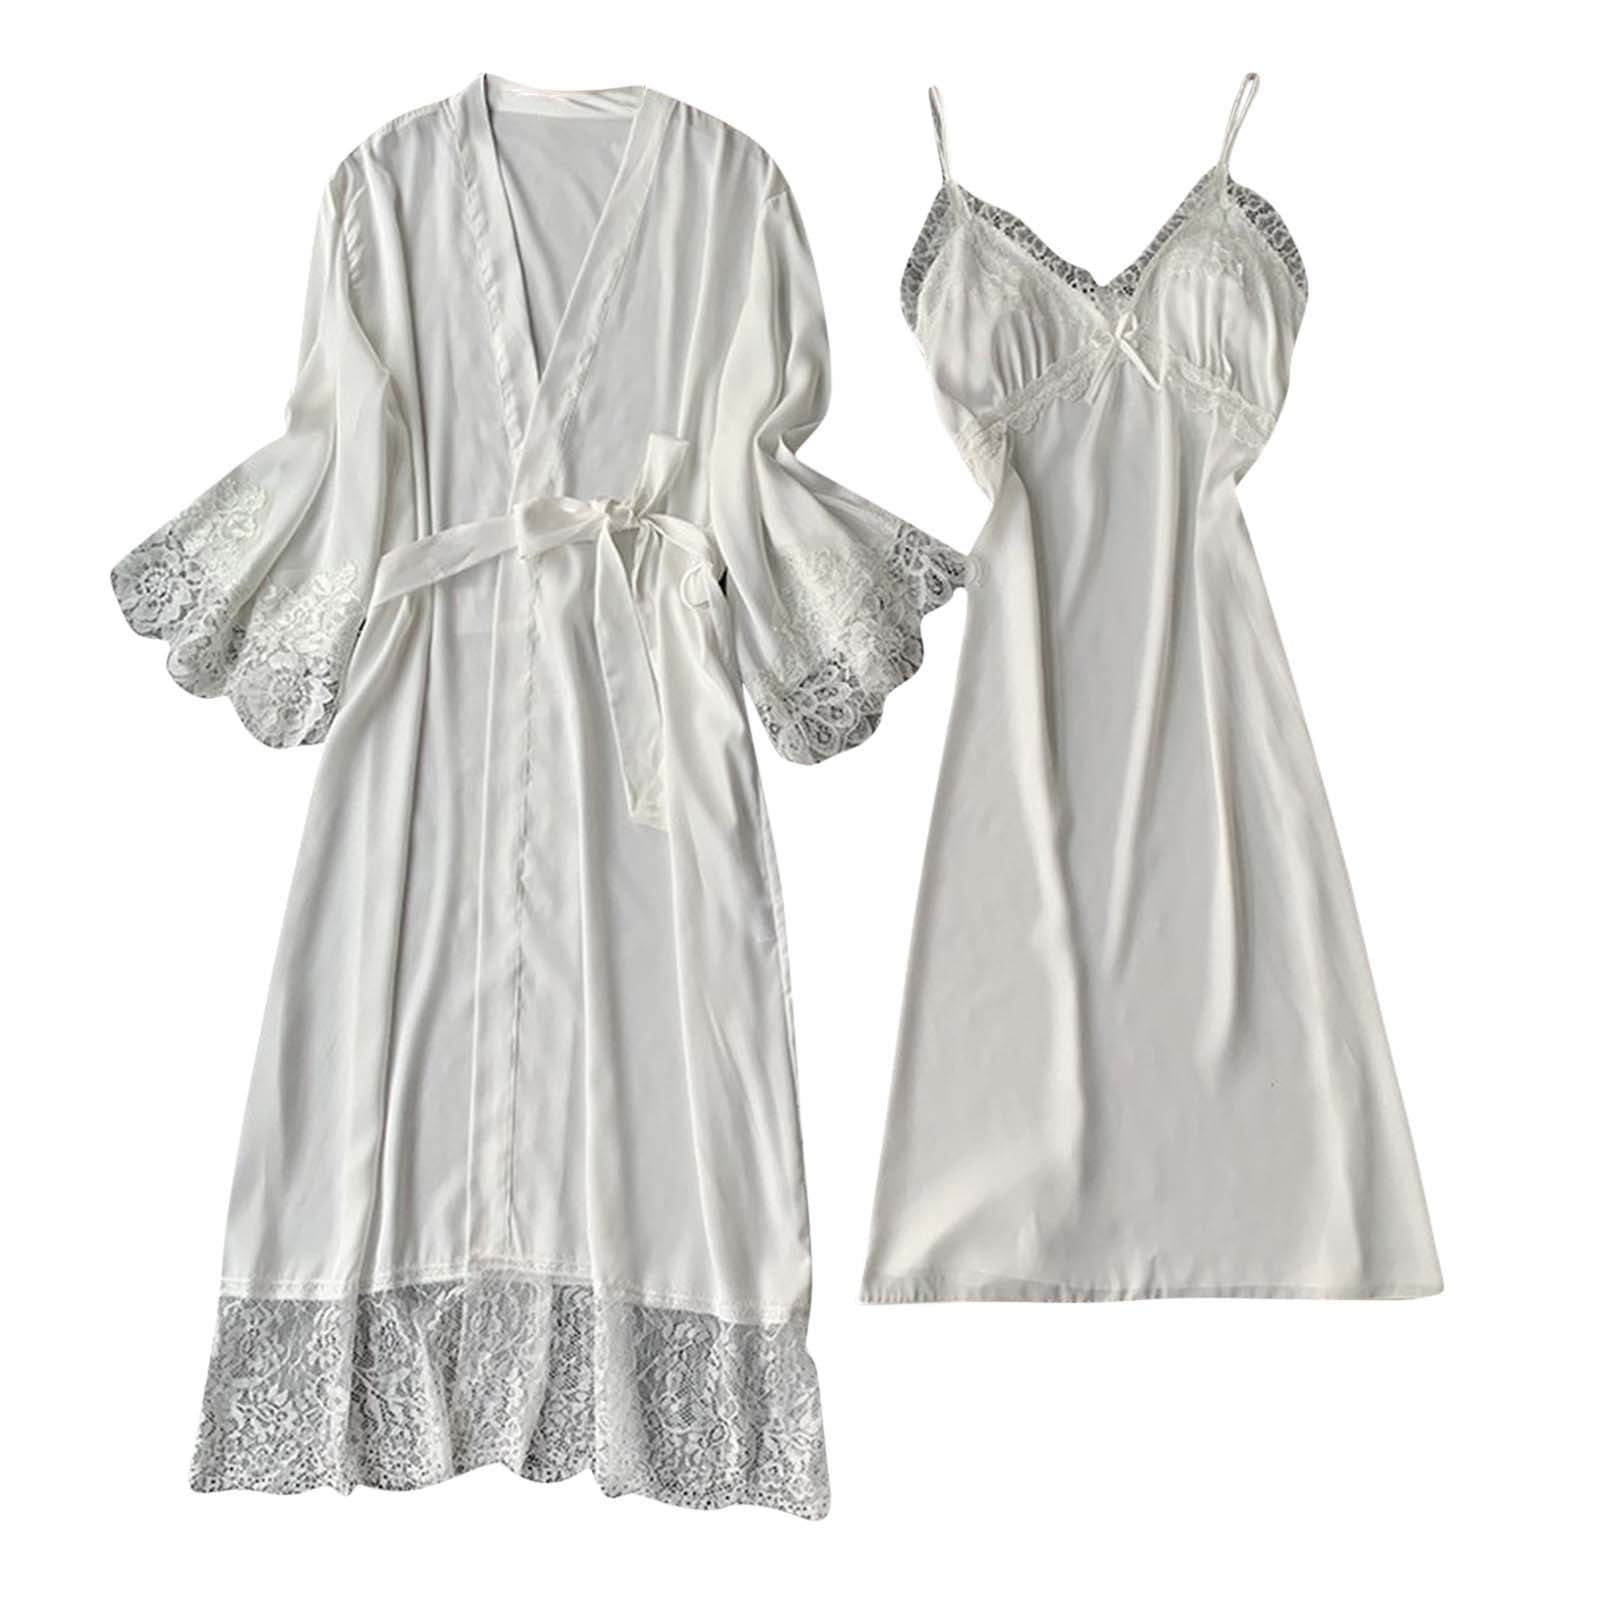 Women s Nightdress Lace Satin Nightgowns Long Chemise Fashion Elegant Add a Long Sleeved Sleeve Nightgown c63cd86b 6997 43dd 90e8 9441f5e477be.ab8eba9b15c0d55d91e8559c55c74789